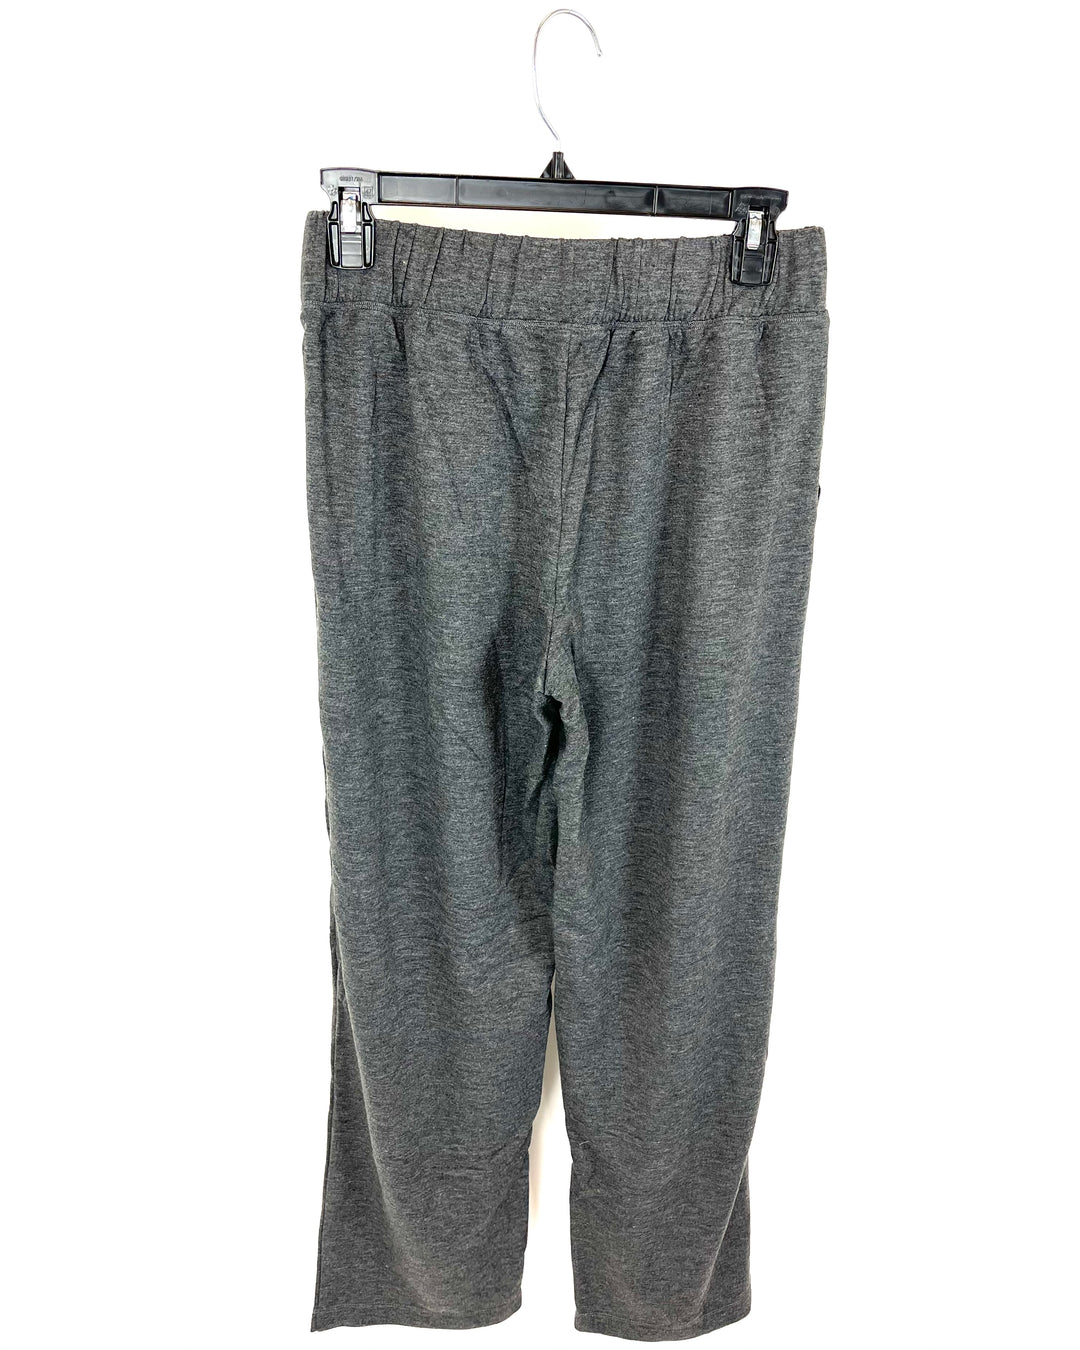 Dark Gray Loungewear Pants - Small